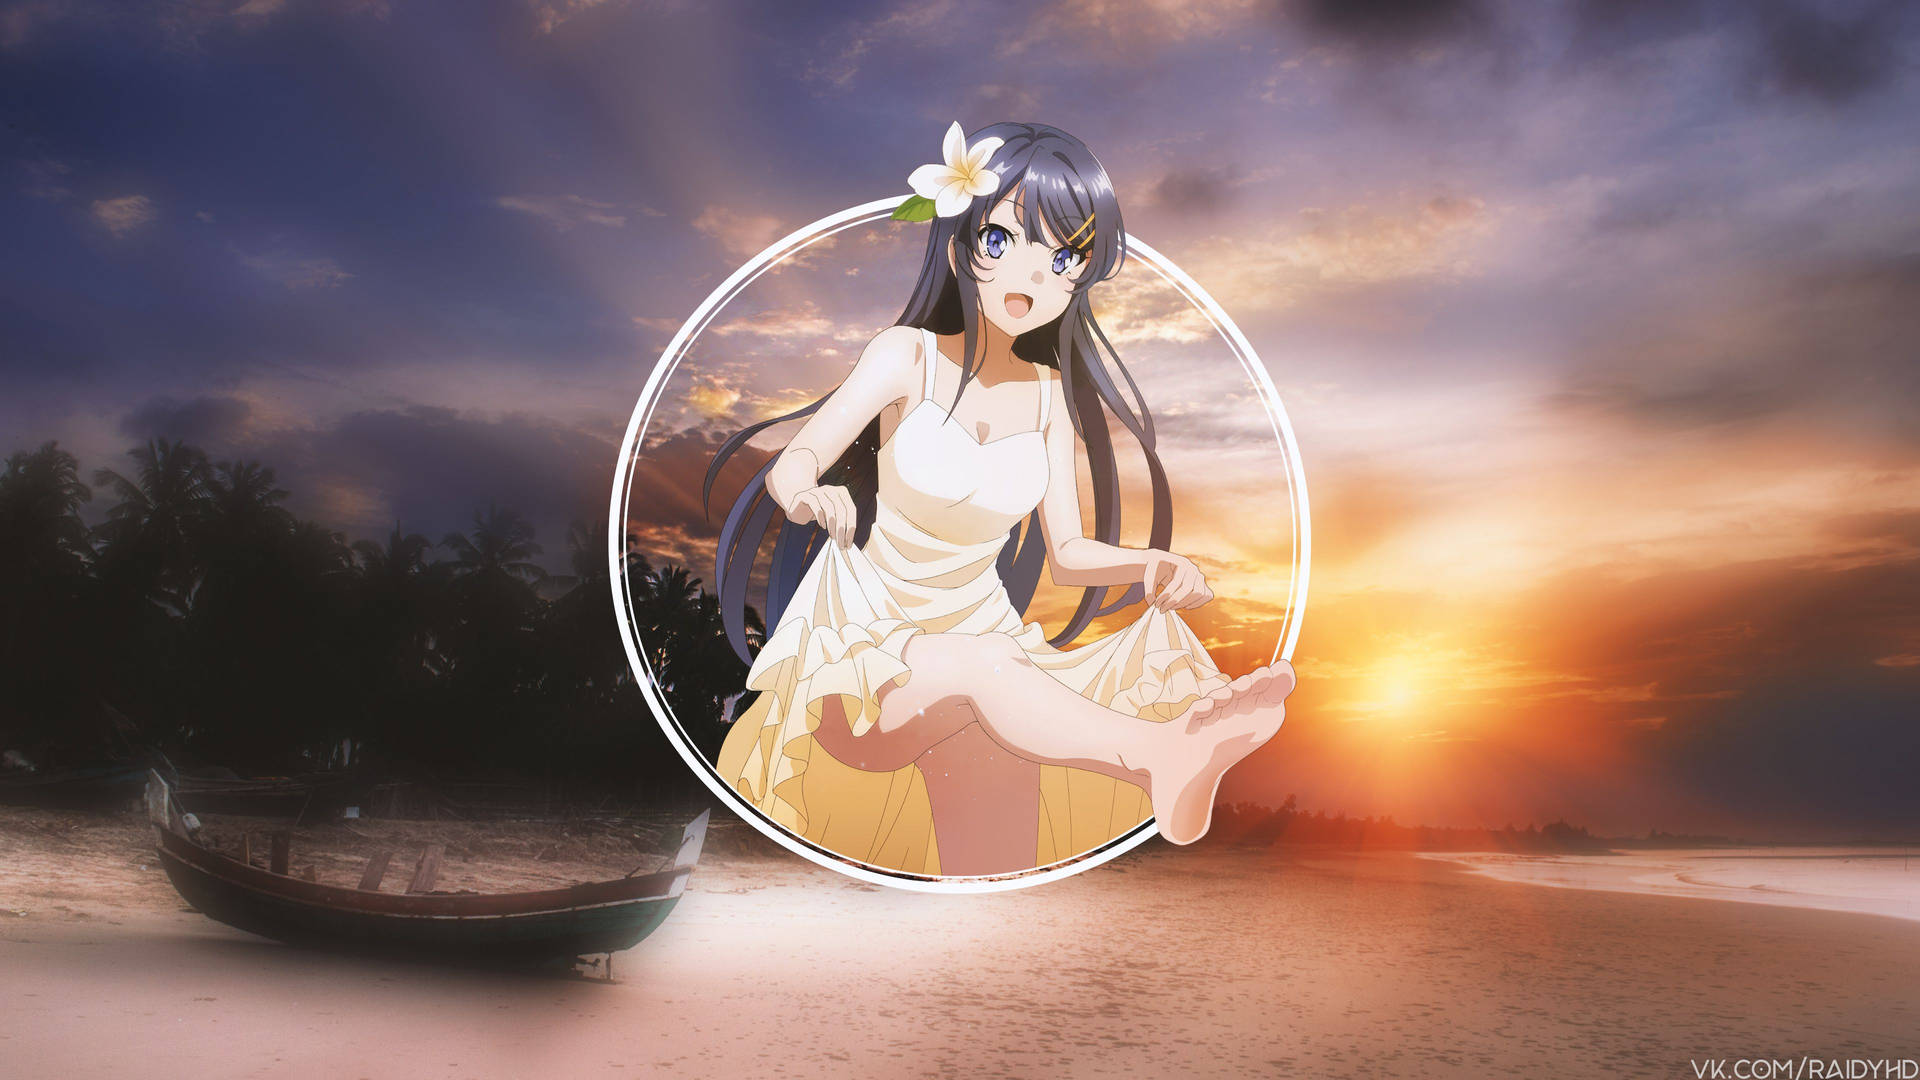 Sakurajima Mai - Seishun Buta Yarou Series - Image by CloverWorks #2780434  - Zerochan Anime Image Board